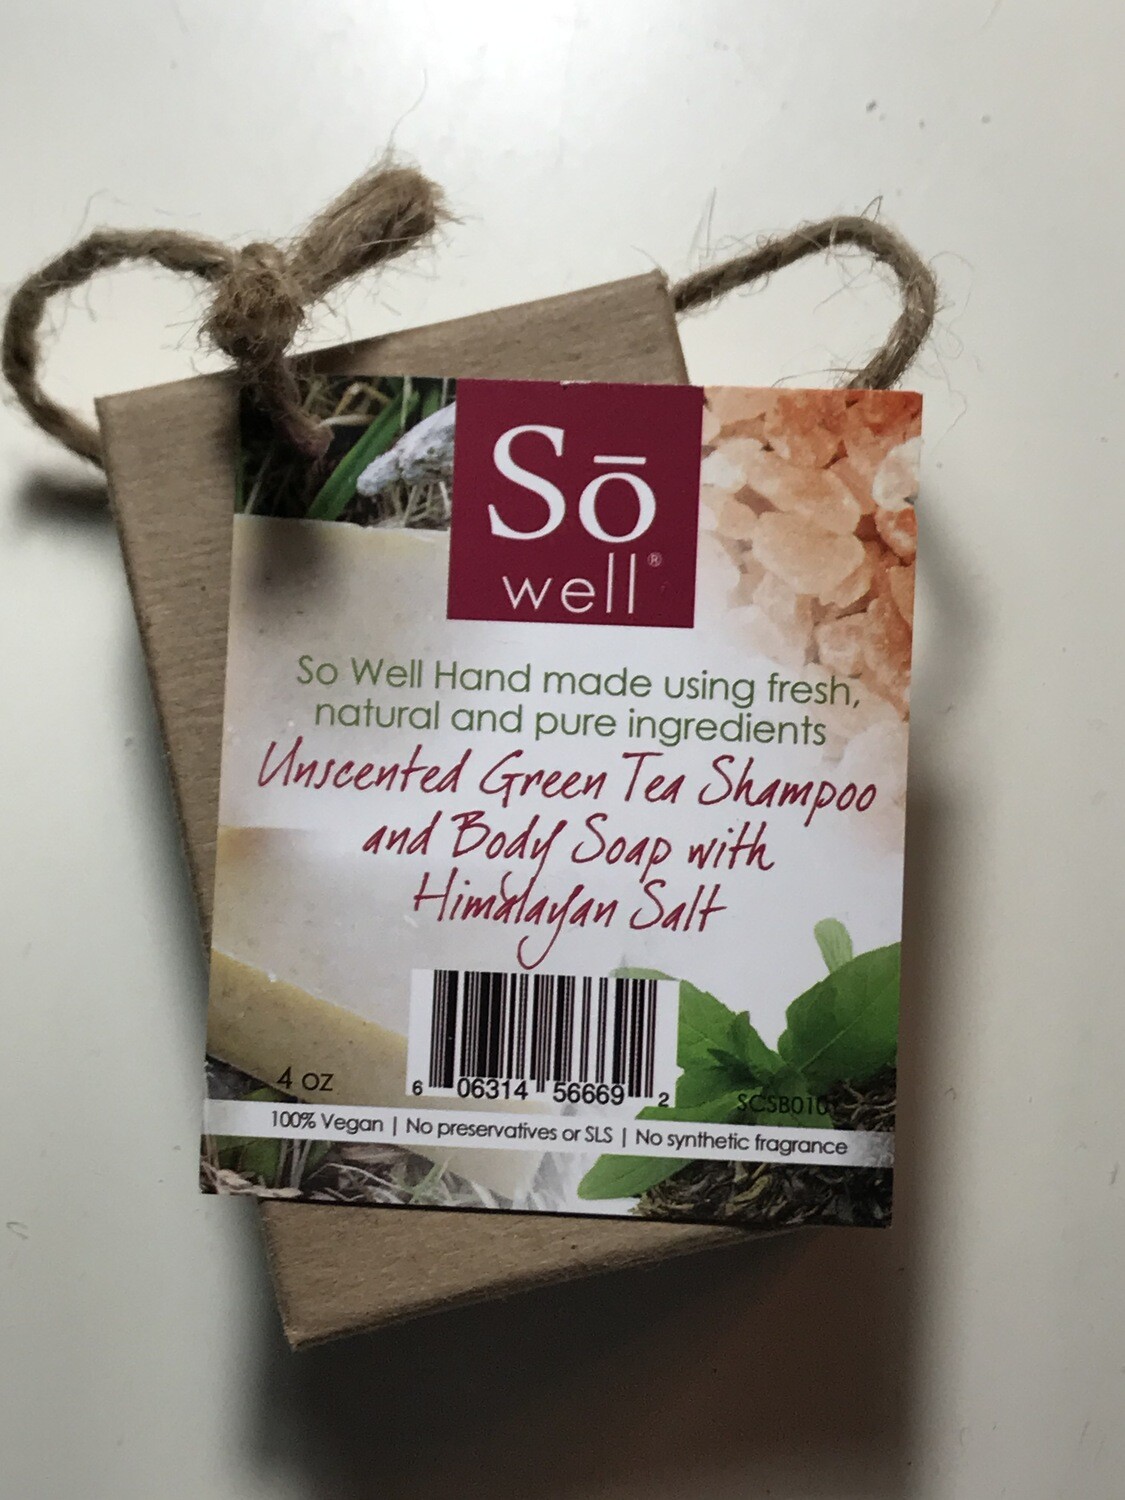 Unscented Green Tea Shampoo & Body Soap with Himalayan Salt